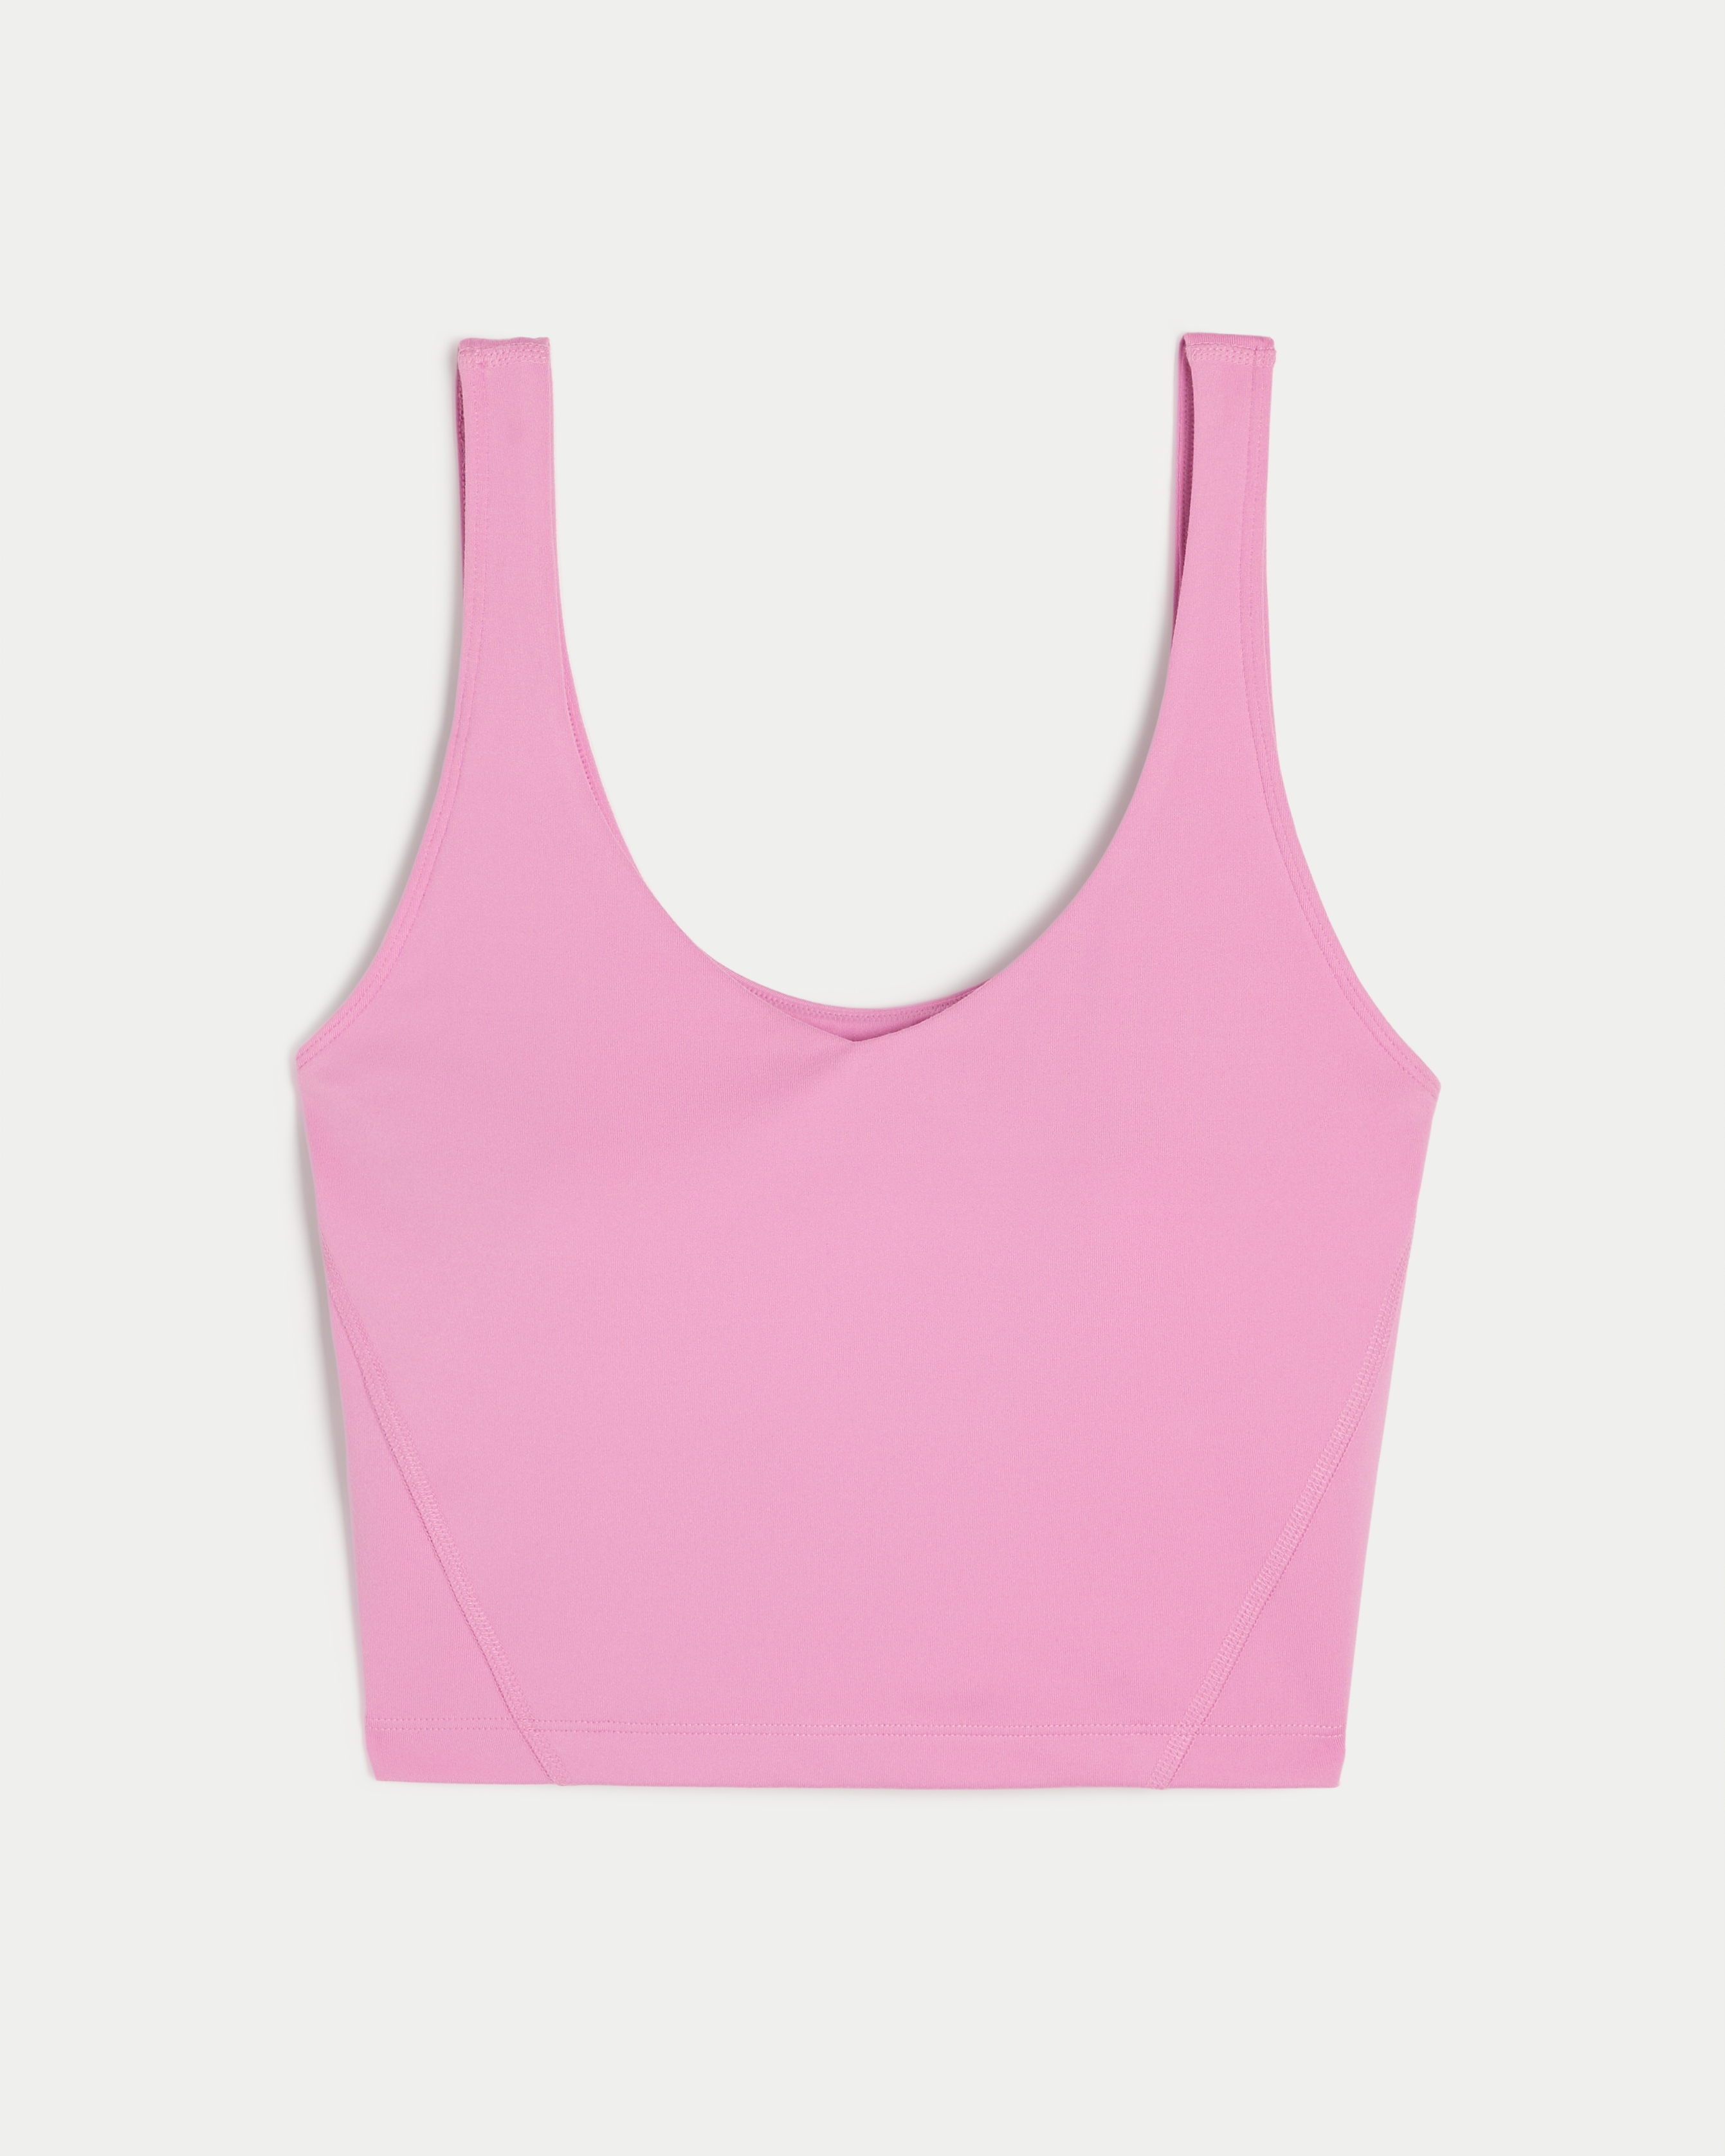 Letsfit Sports Bra Crop Top Small Mauve Activewear Yoga Pink